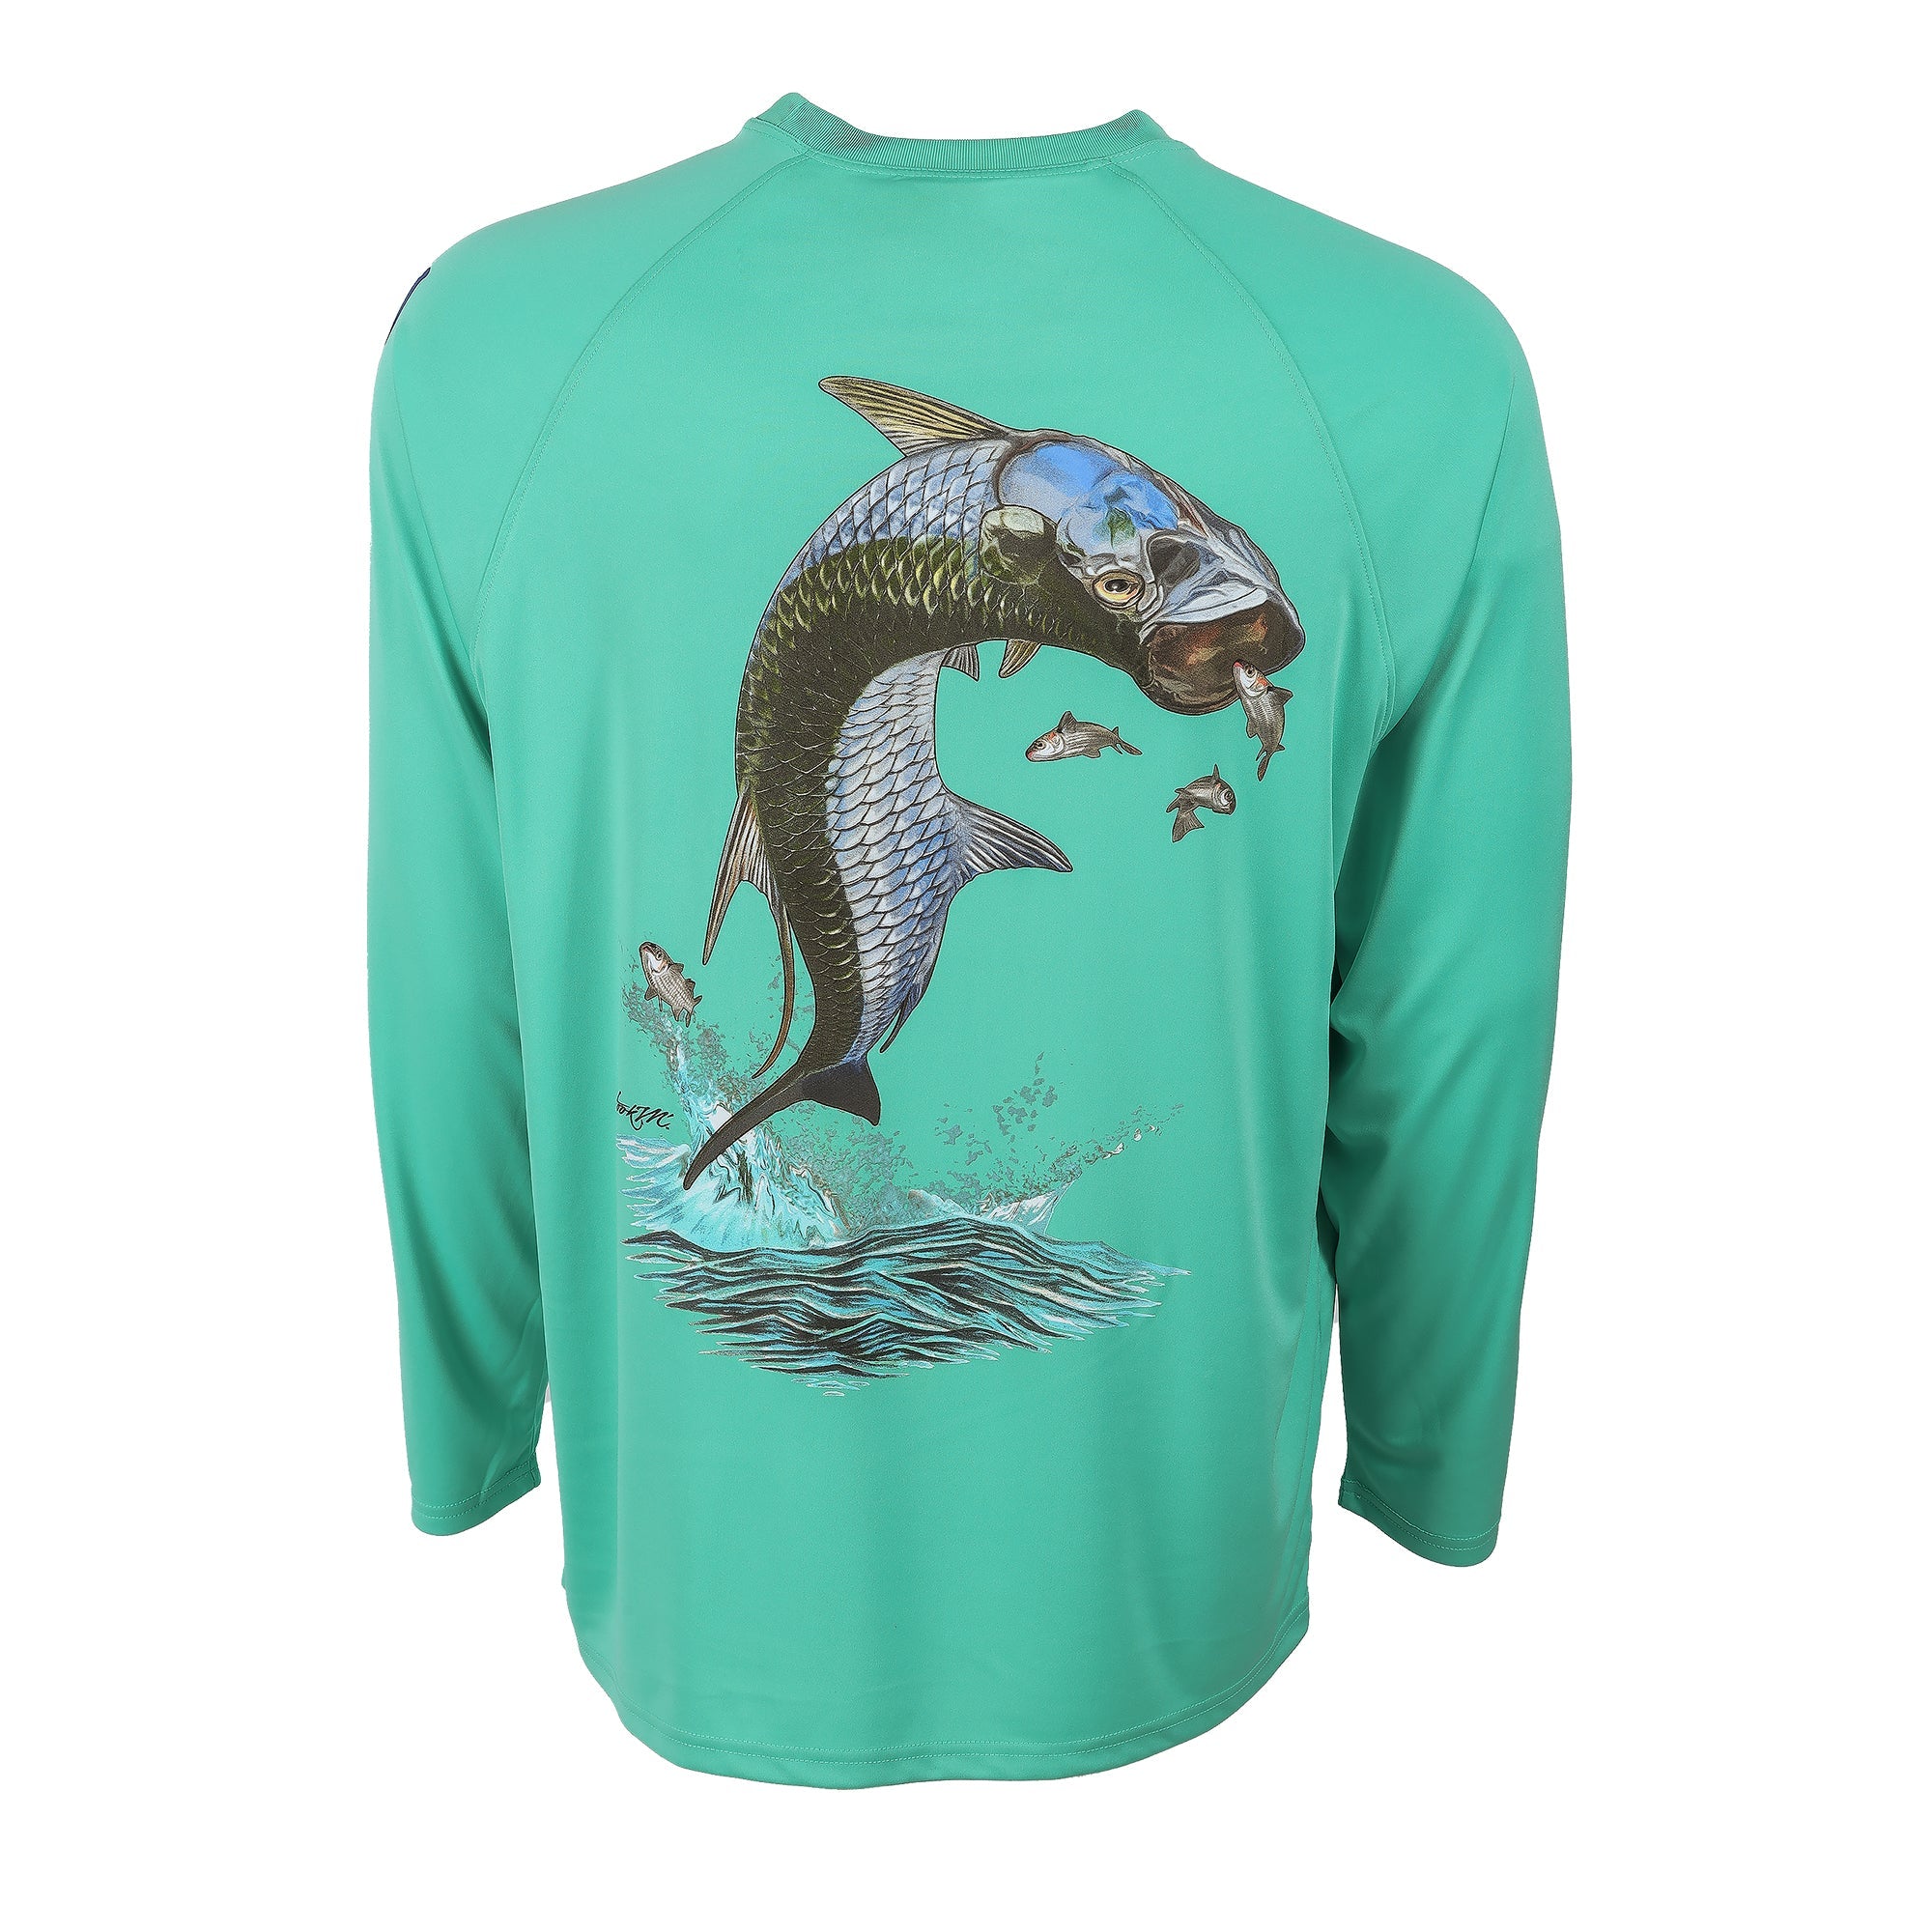 Fishing Mens Long Sleeved Bass Fish Shirt - Mens / unisex Long Sleeved Cotton Shirt - Size Small Medium Large XL 2XL -Great Gift for Him